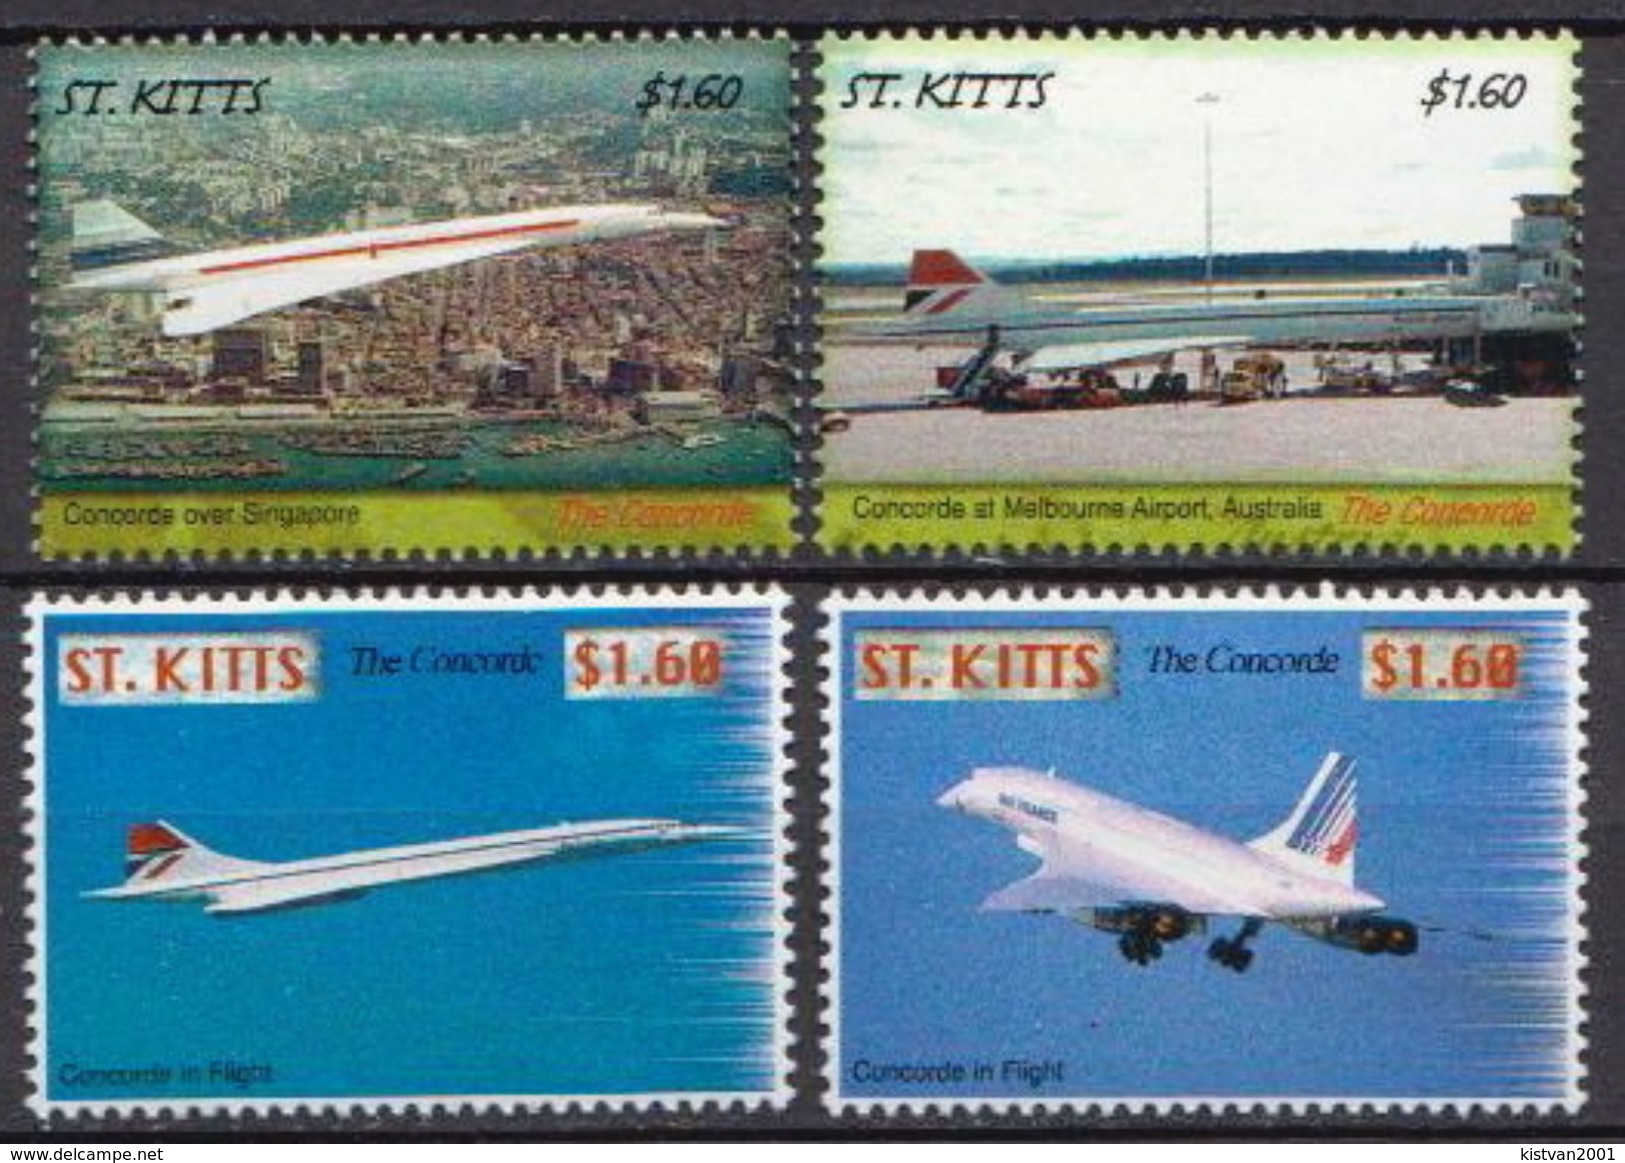 St Kitts MNH Concorde Set - Concorde